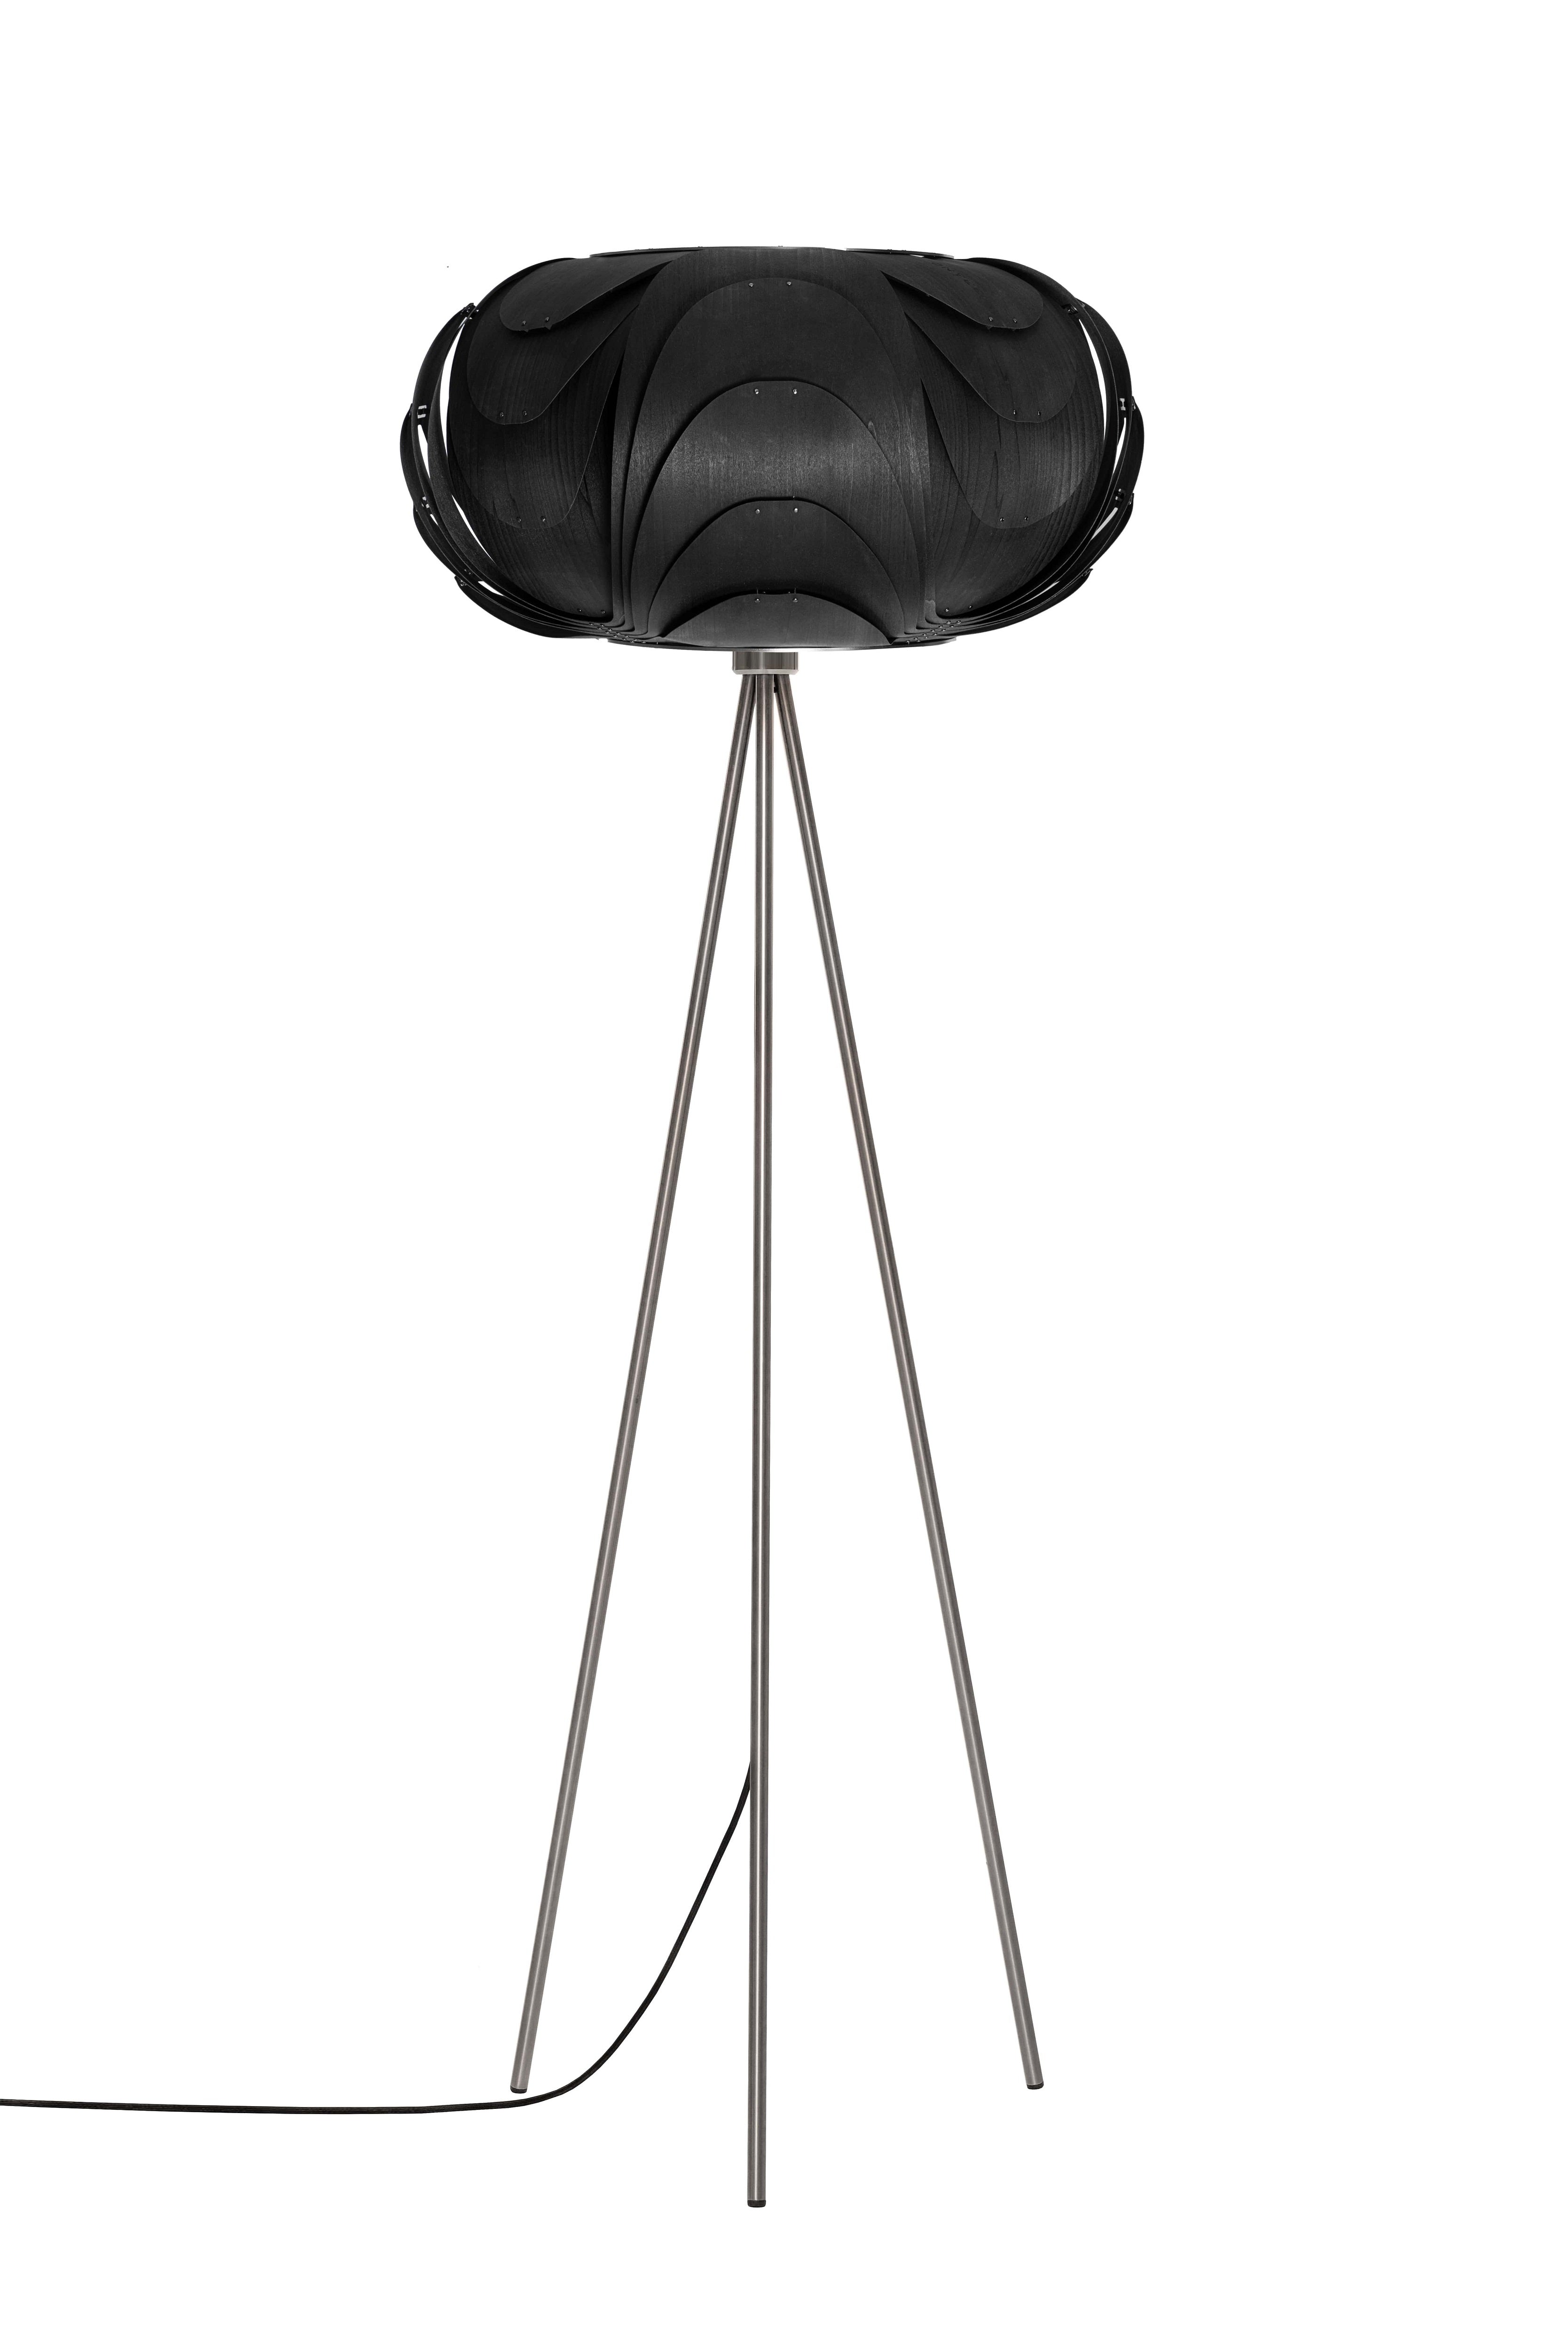 Moderne sehr elegante schwarze Holz Stehlampe mit Tripod aus gebürstetem Edelstahl